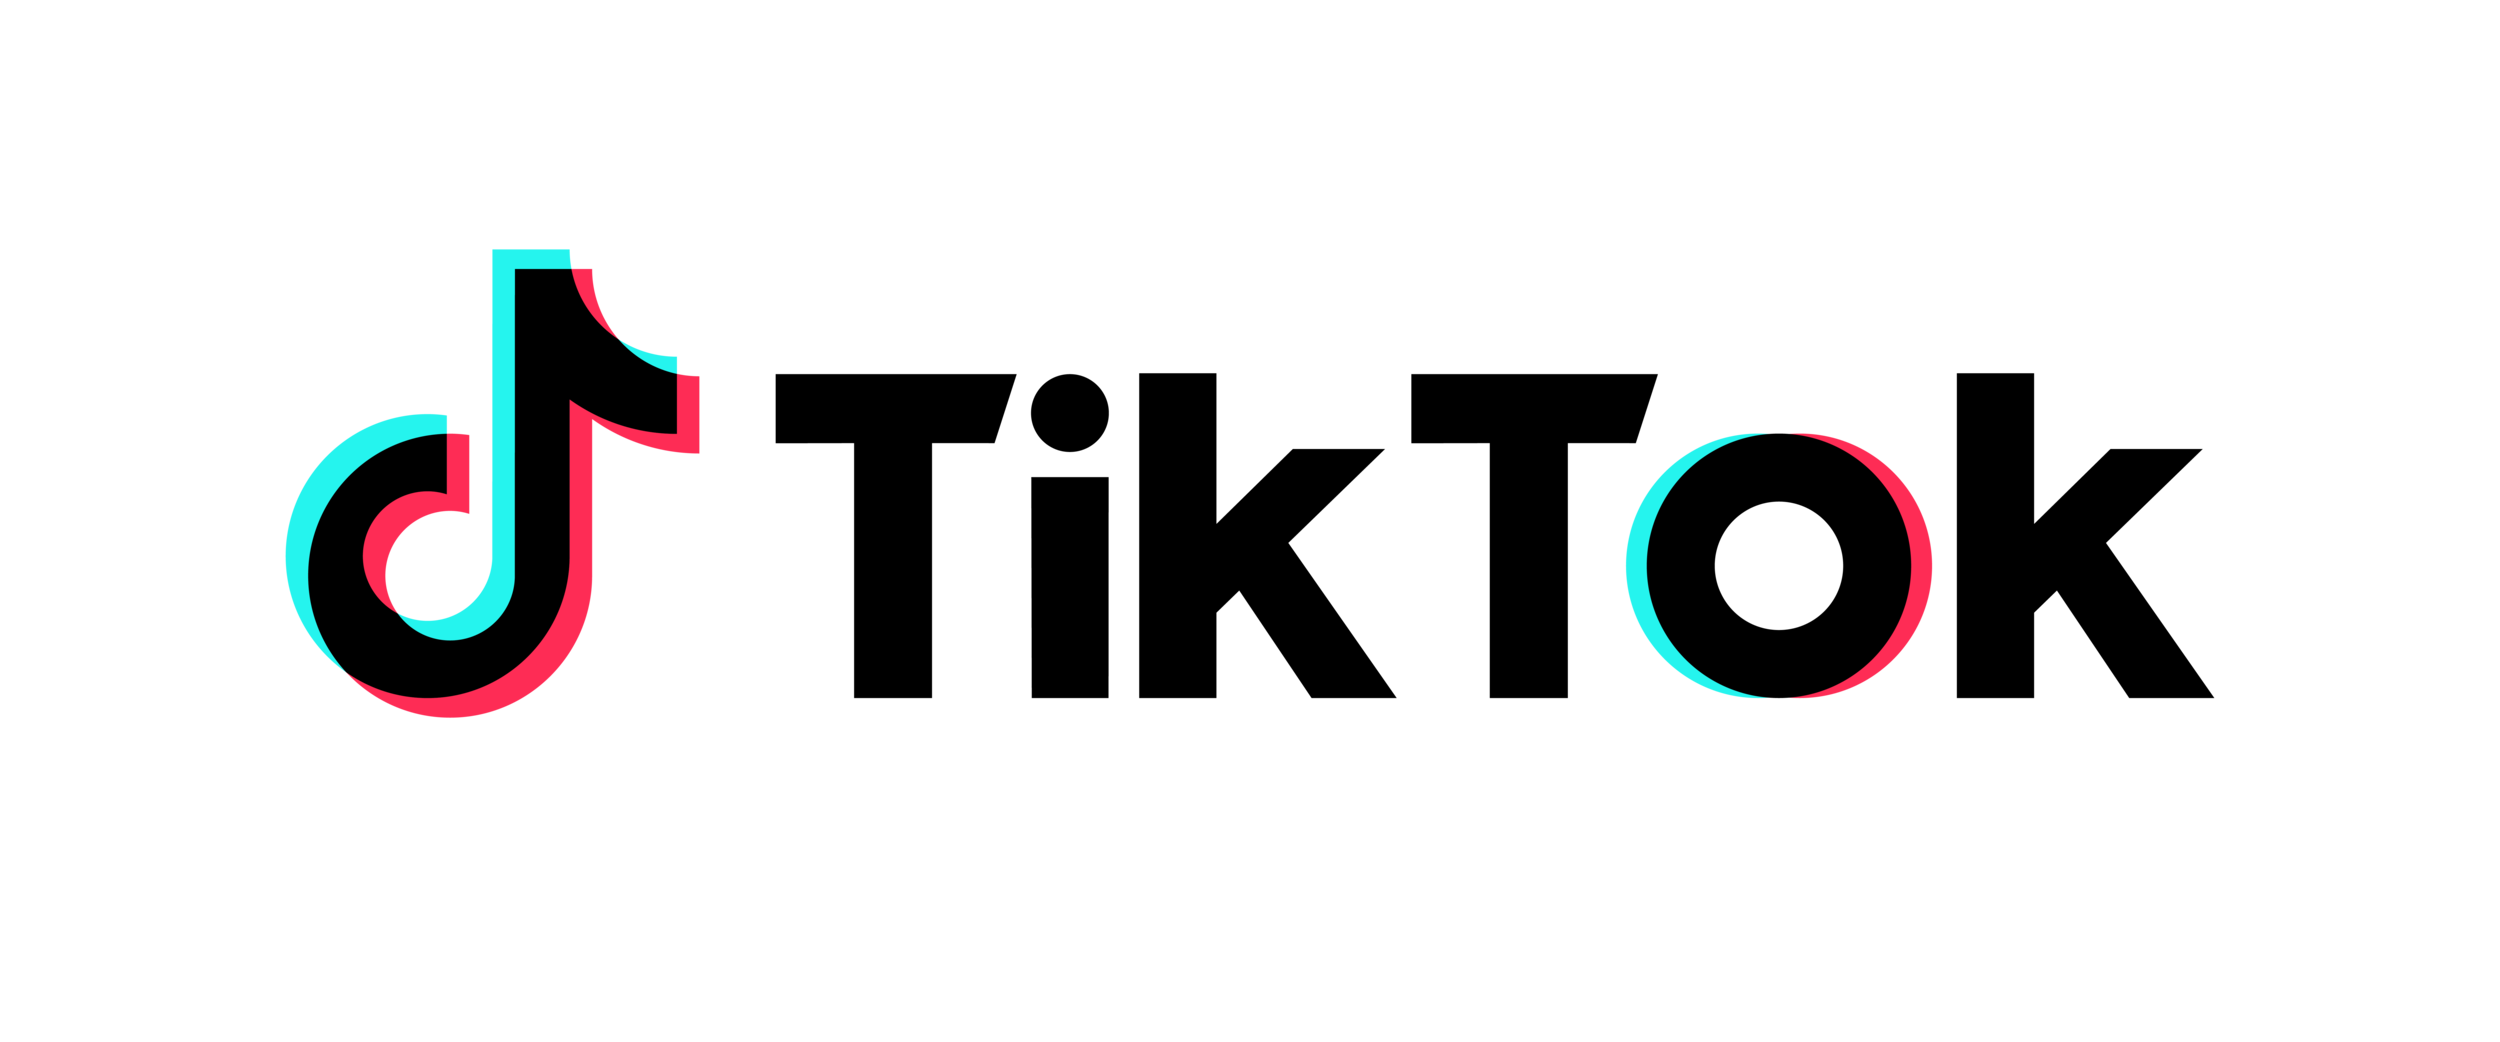 TikTok-logo-RGB-Horizontal-black.png